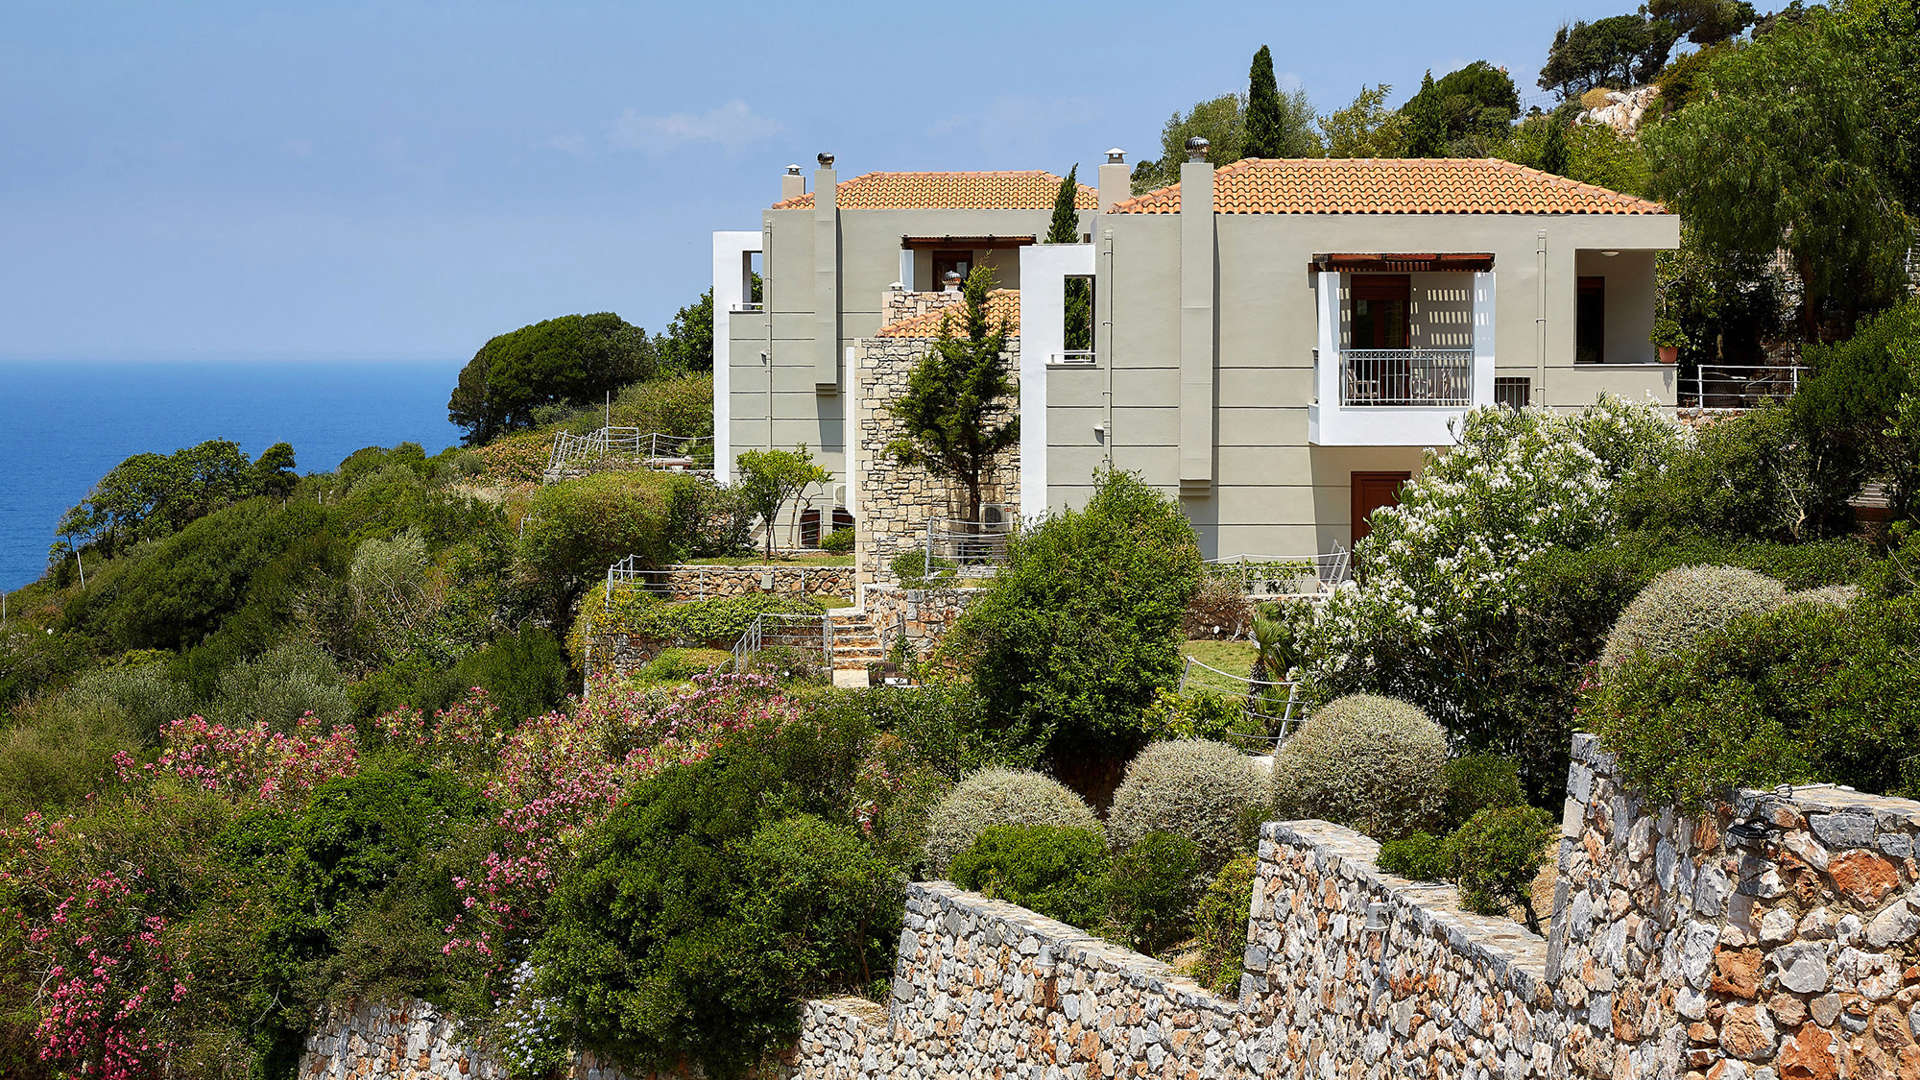 Okeanides Villas Crete